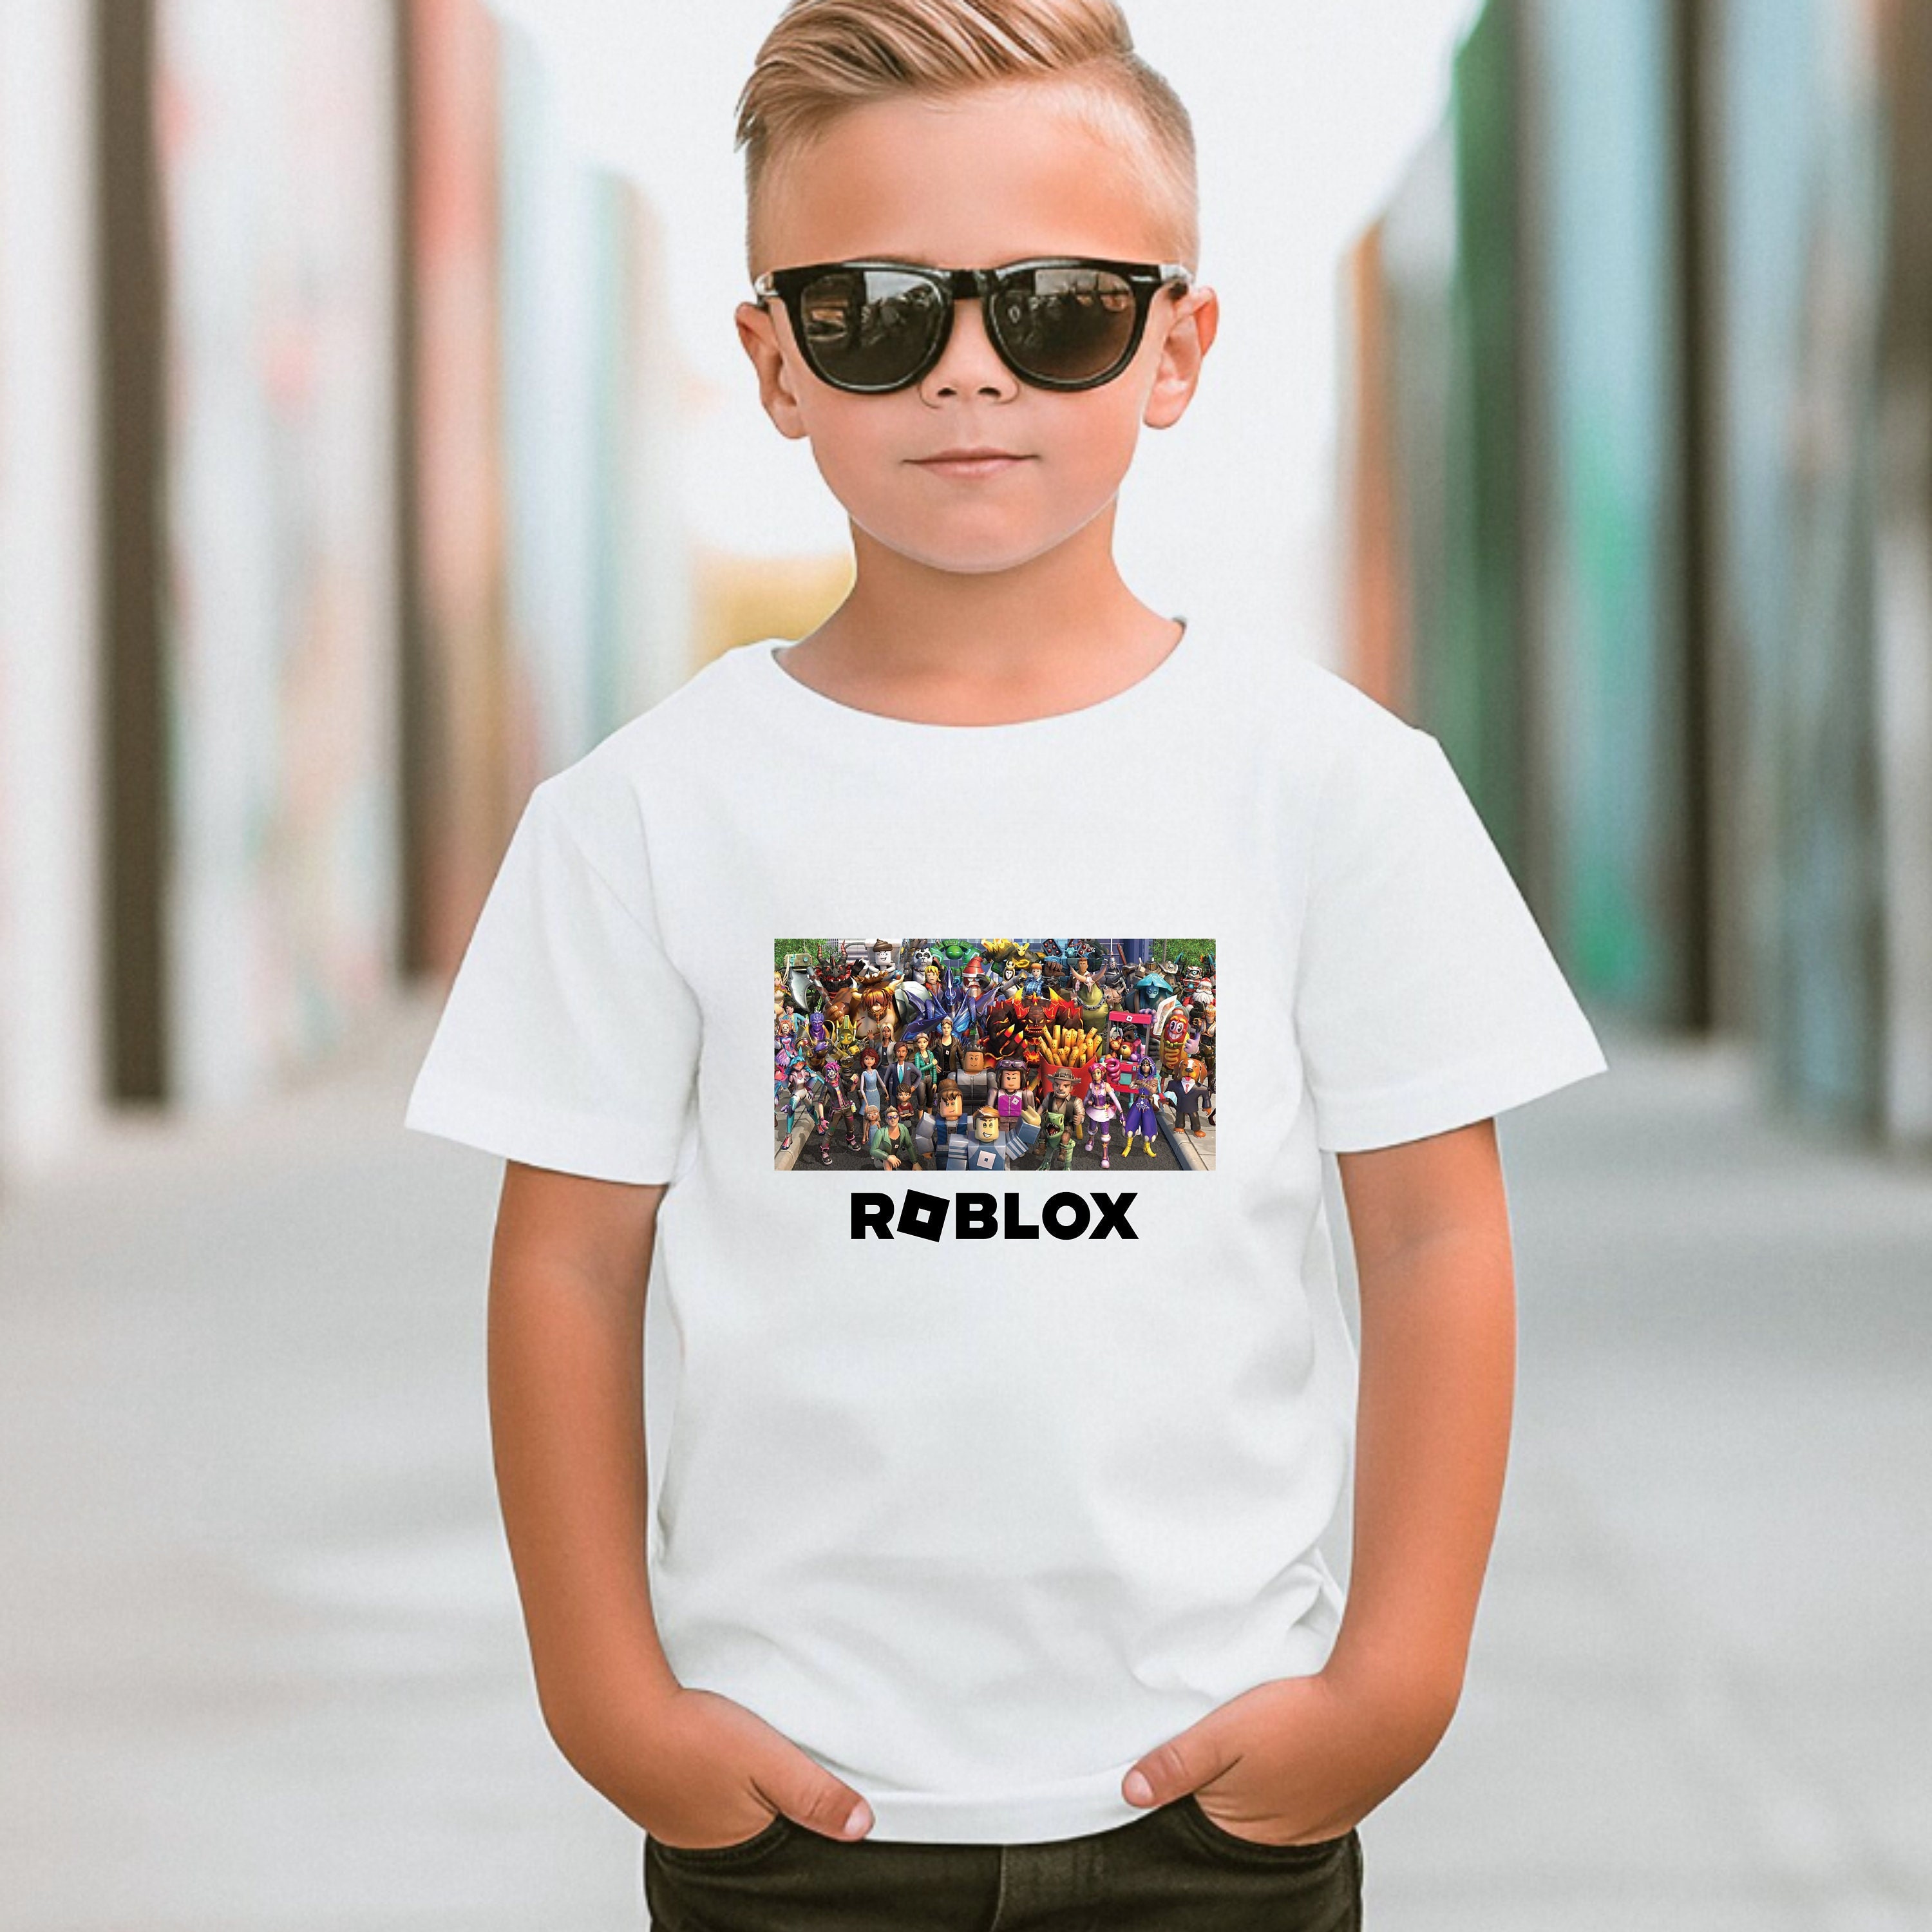 Roblox Face 28 Girl Character T-Shirt, Children Costume Shirts